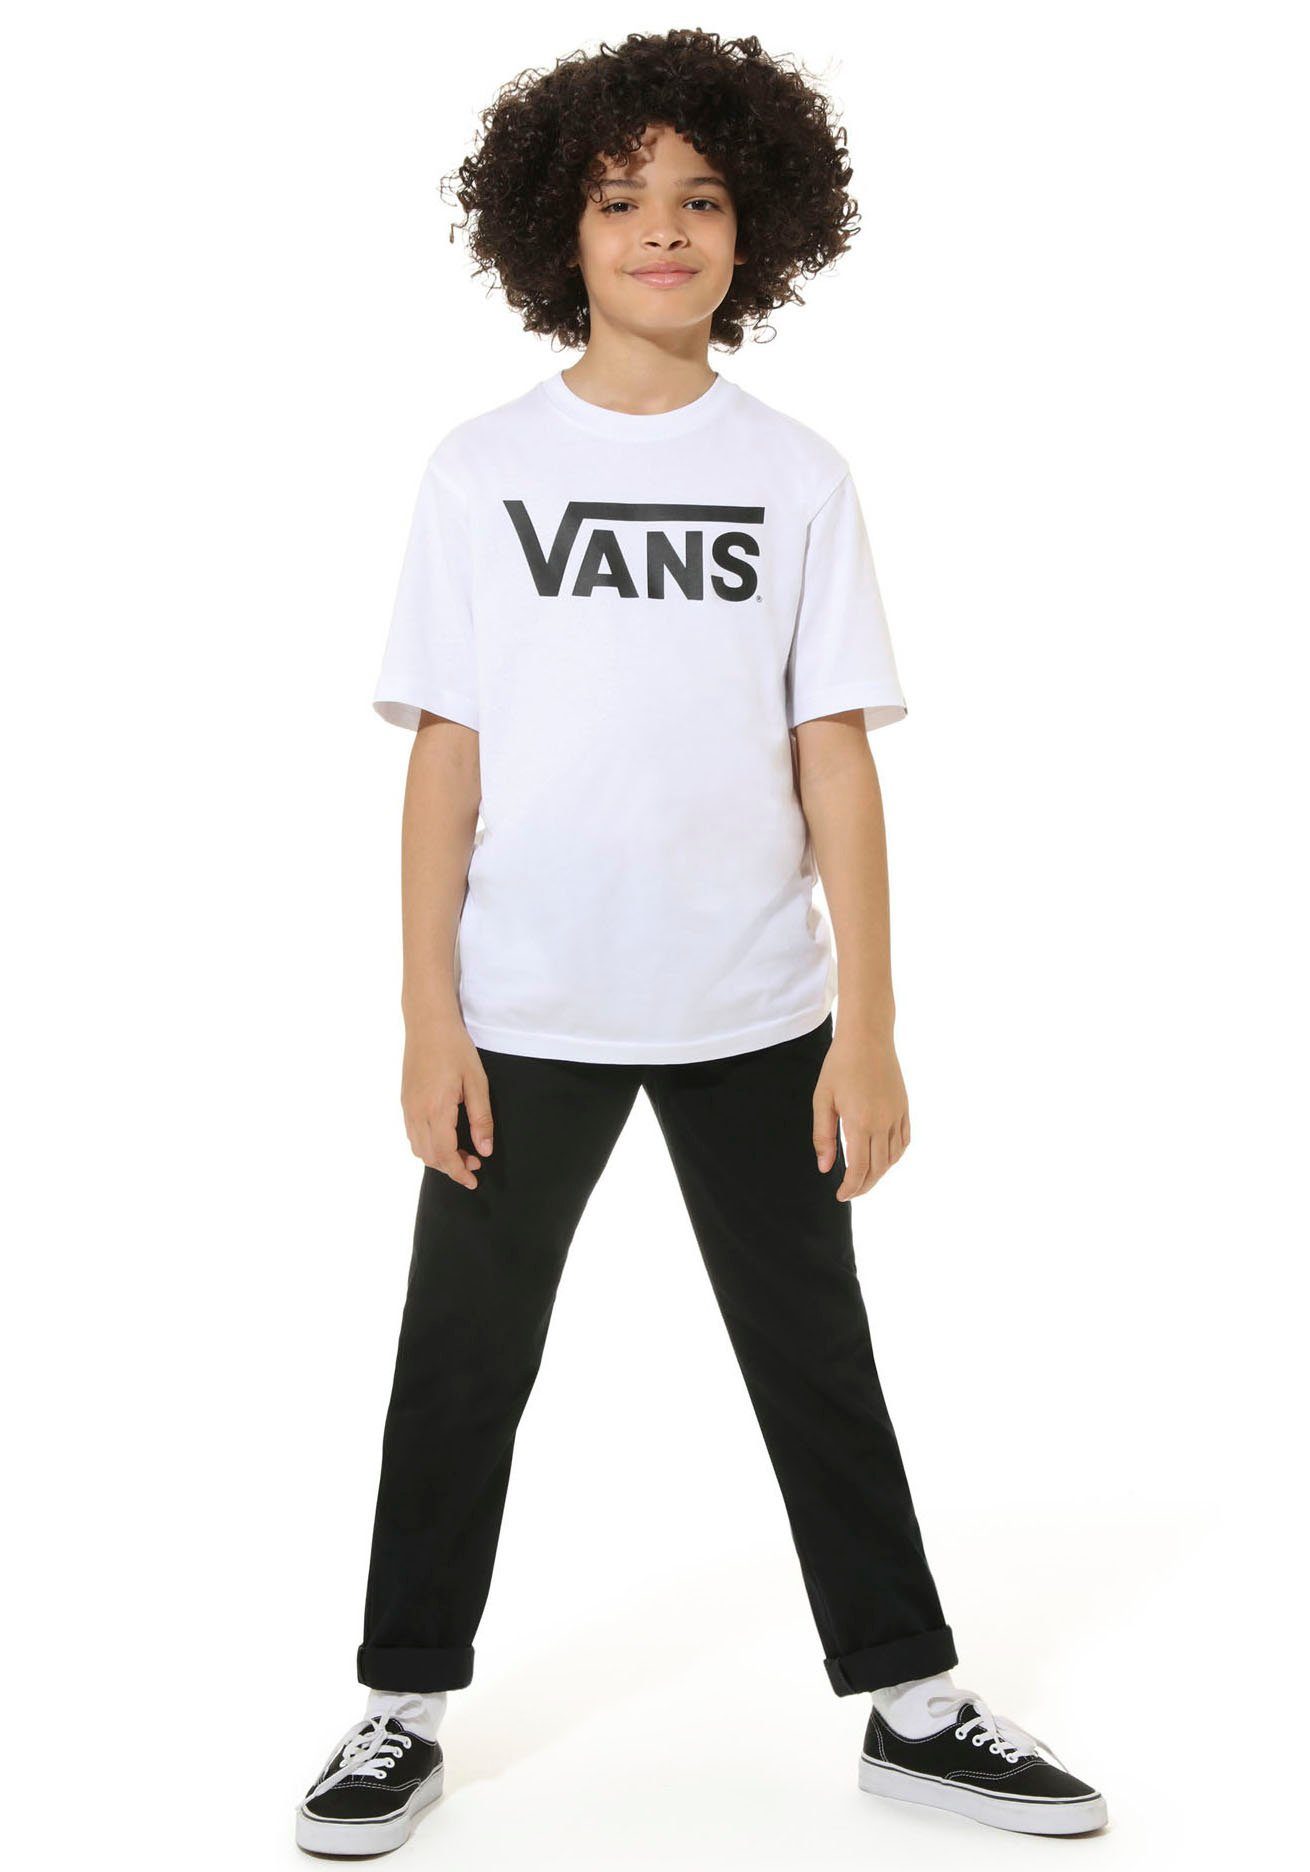 Vans T-Shirt CLASSIC VANS weiß BOYS